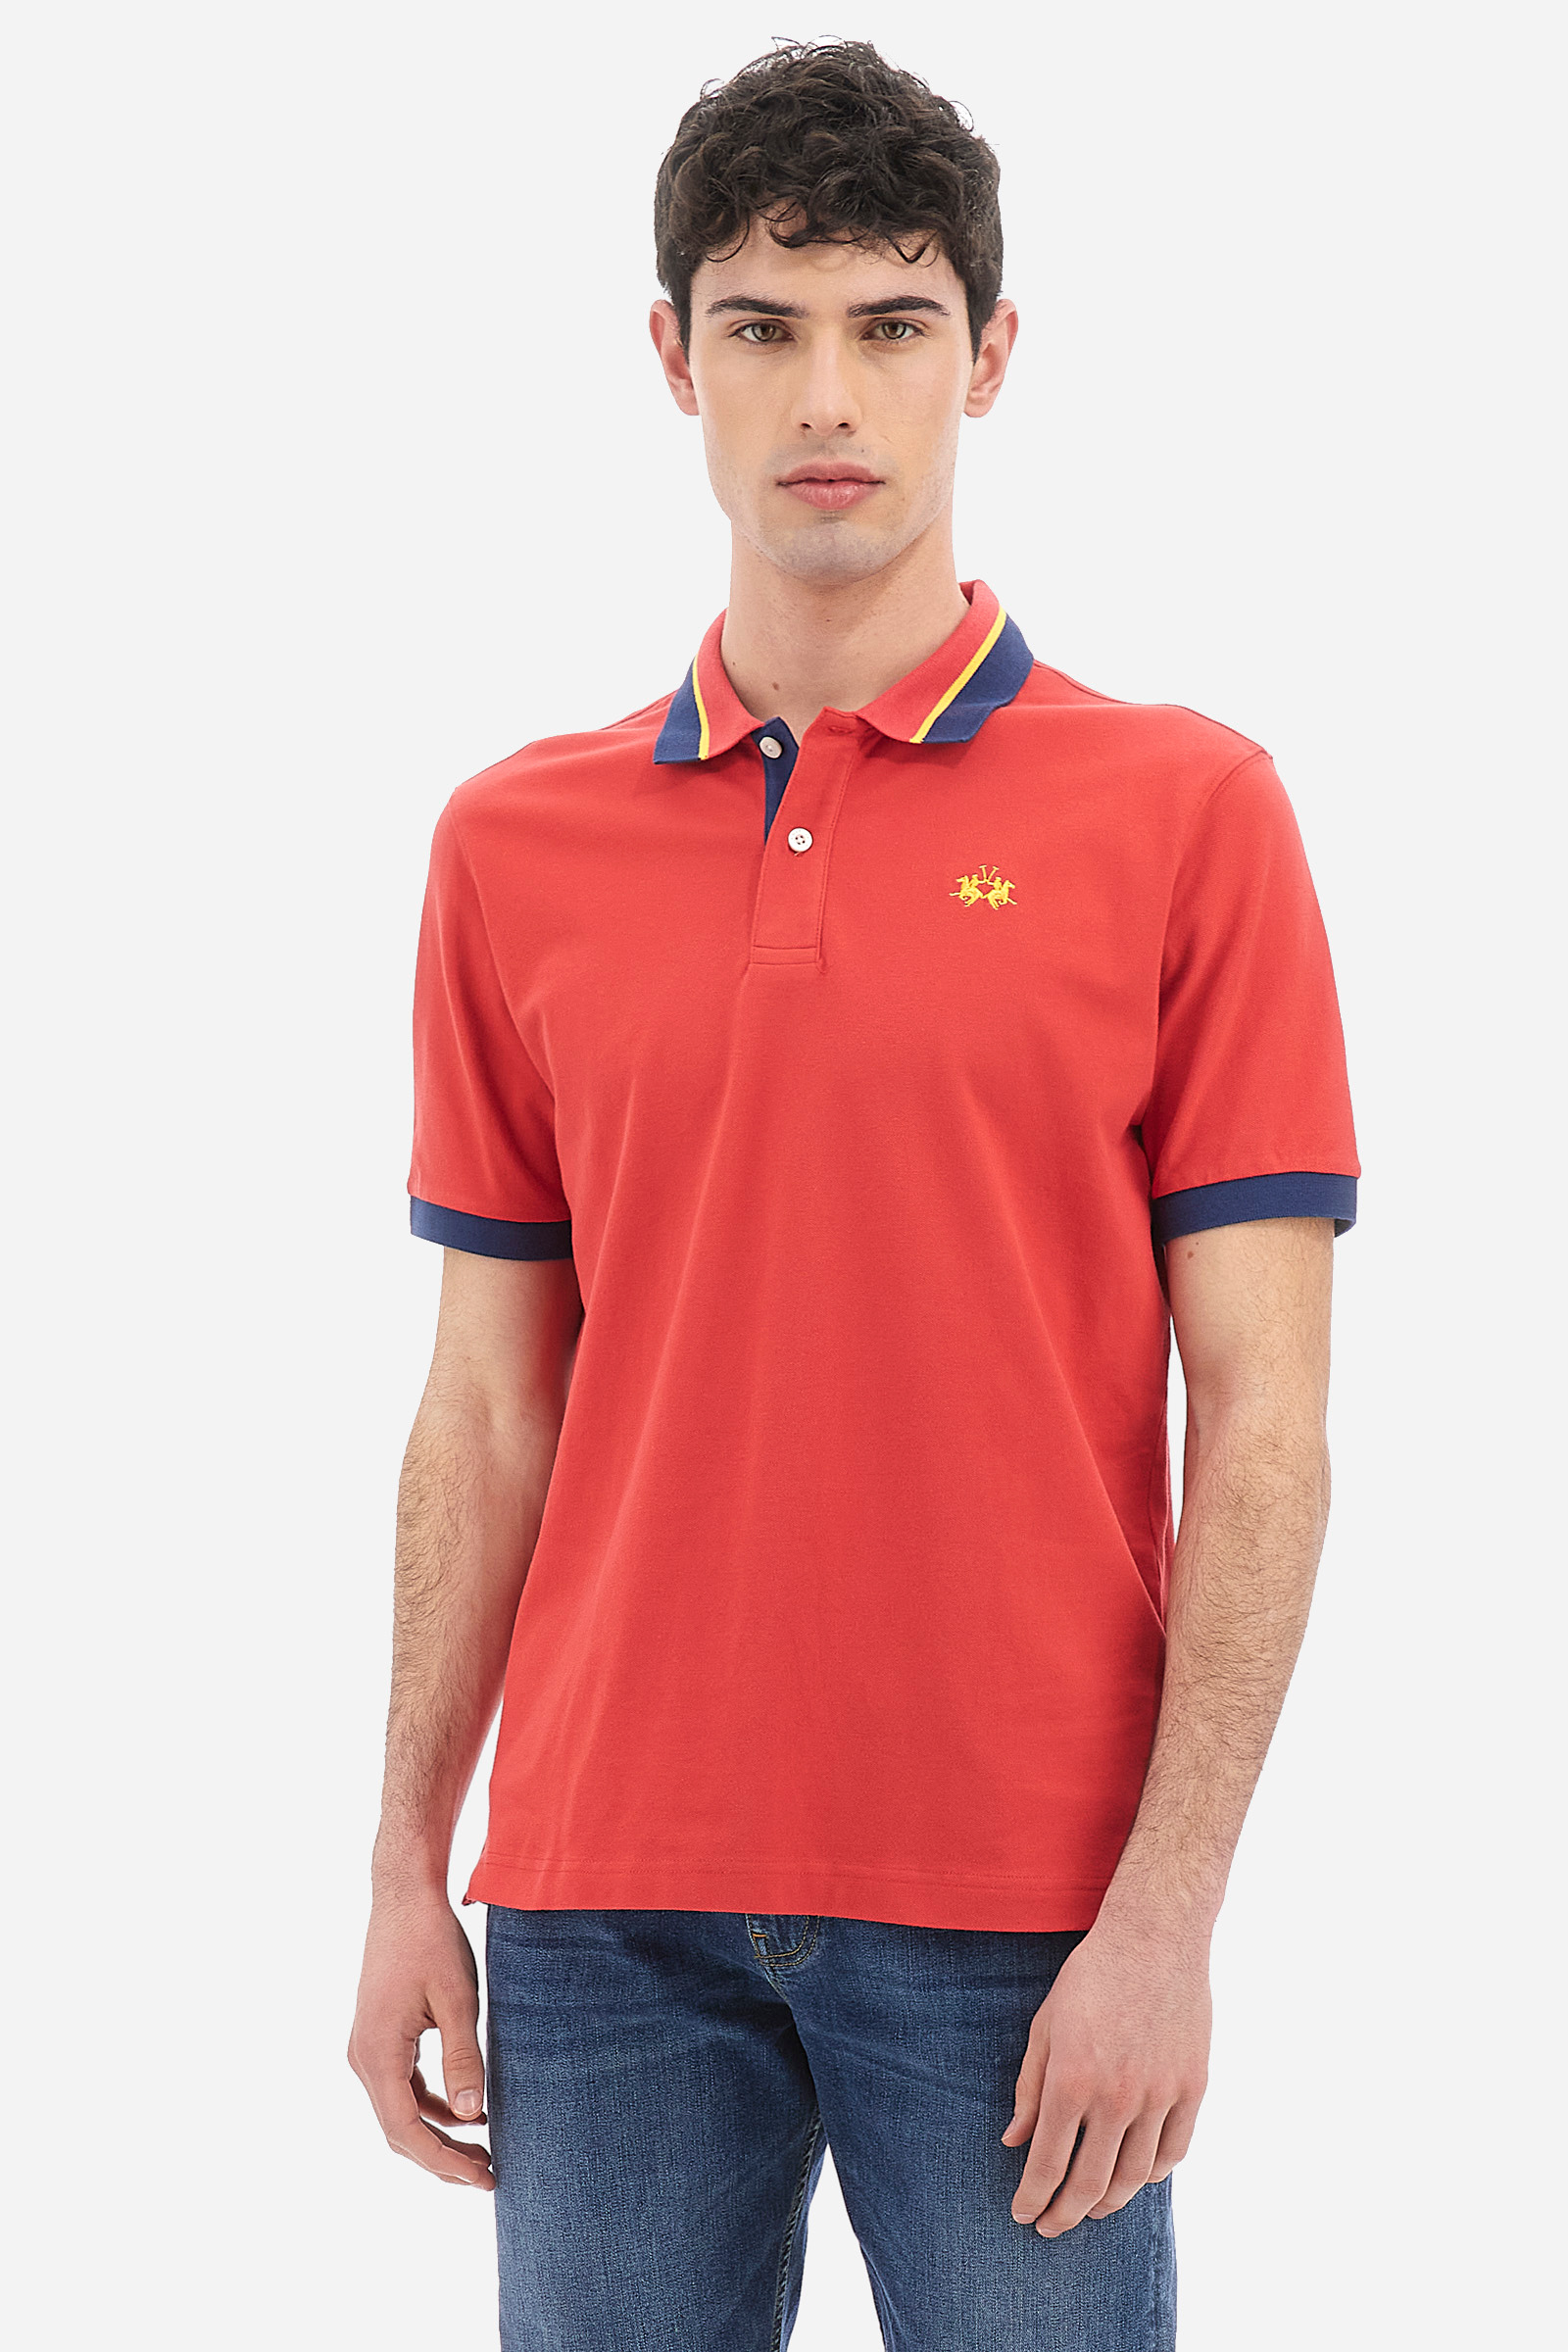 Men's short-sleeved polo shirt regular fit stretch cotton - Valentino Poinsettia La | Shop